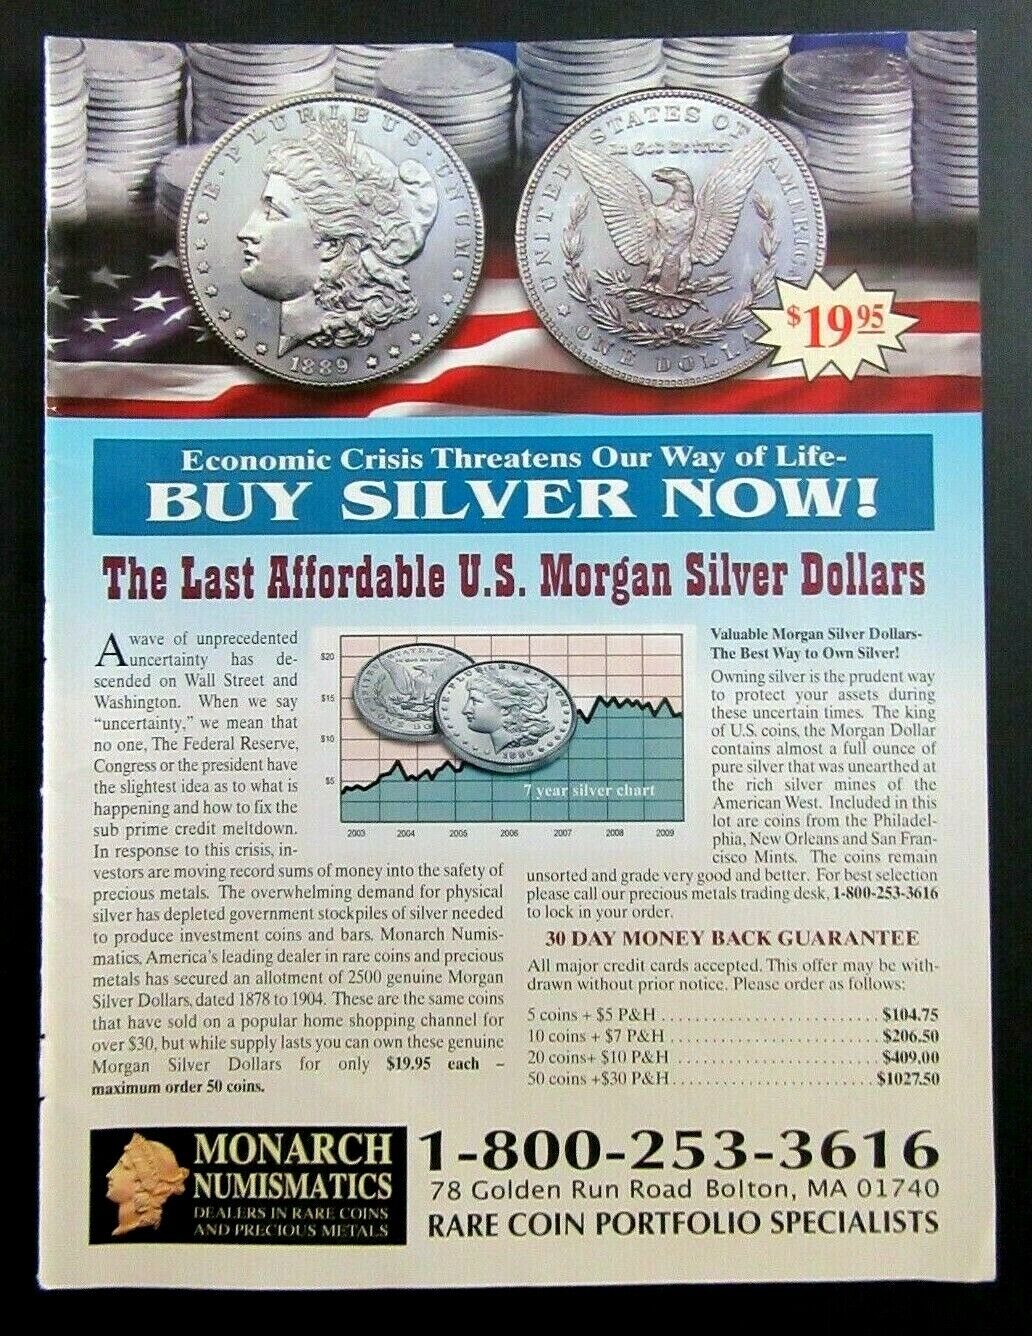 2009 MONARCH NUMISMATICS U.S. Morgan Silver Dollars Magazine Ad